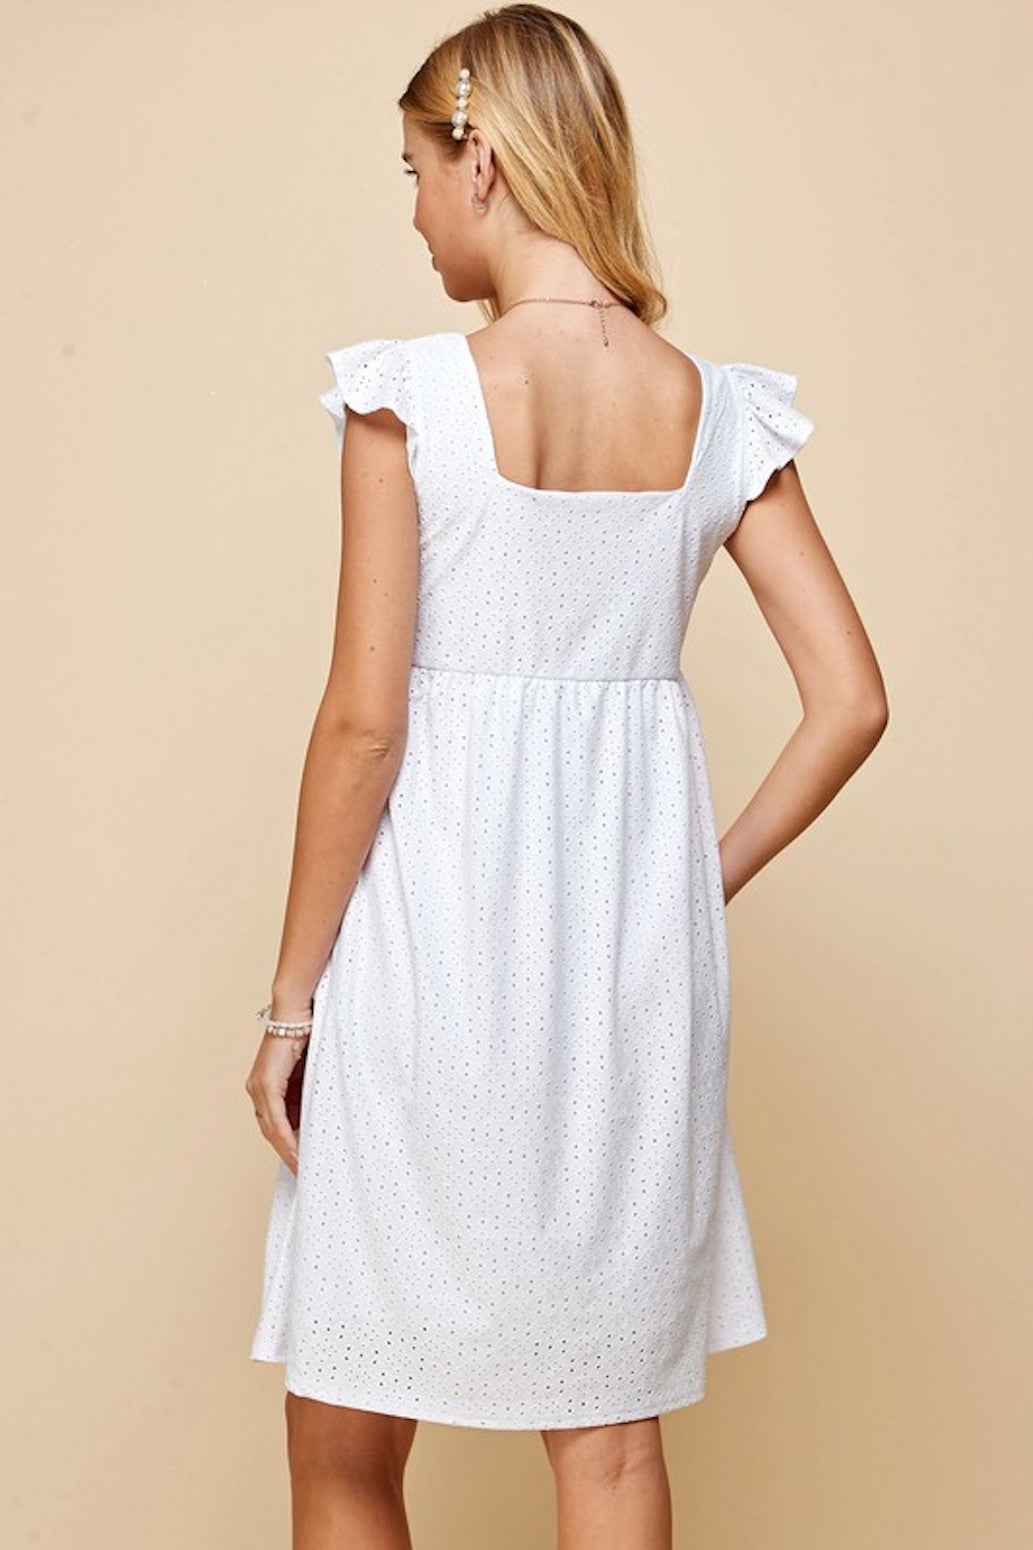 Shop Plus Size Sequin Dress Shop Online - SleekTrends